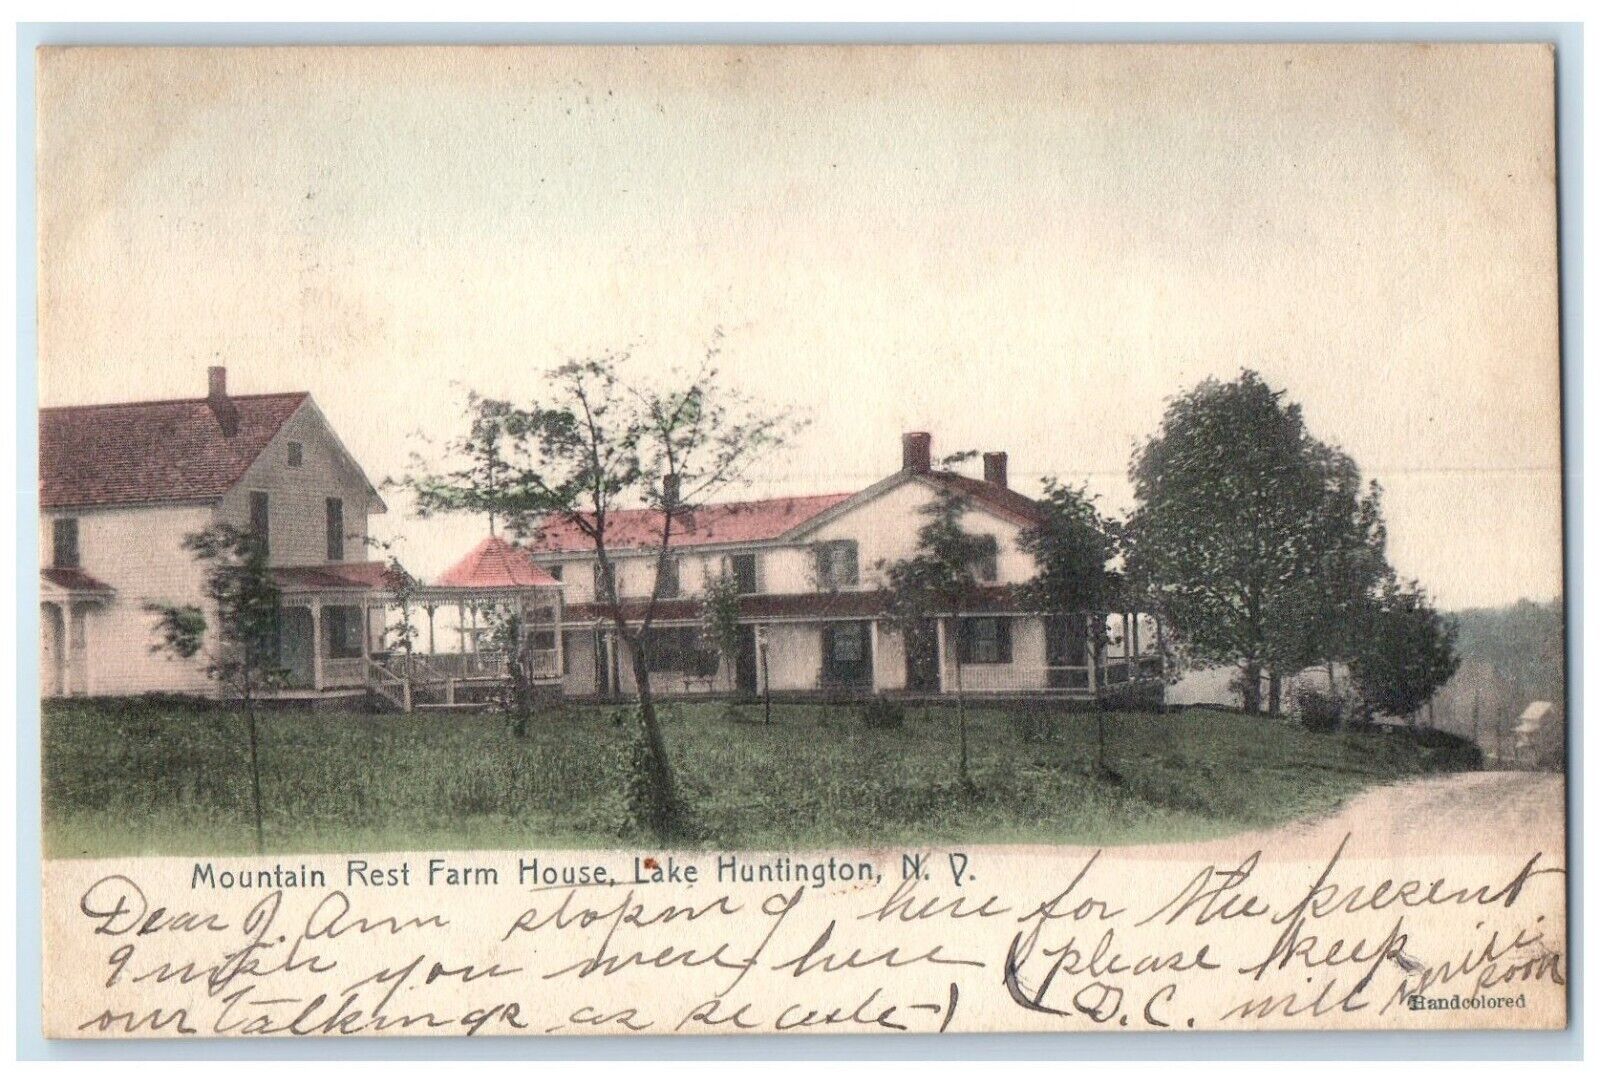 1905 Mountain Rest Farm House Lake Huntington New York Antique Vintage Postcard